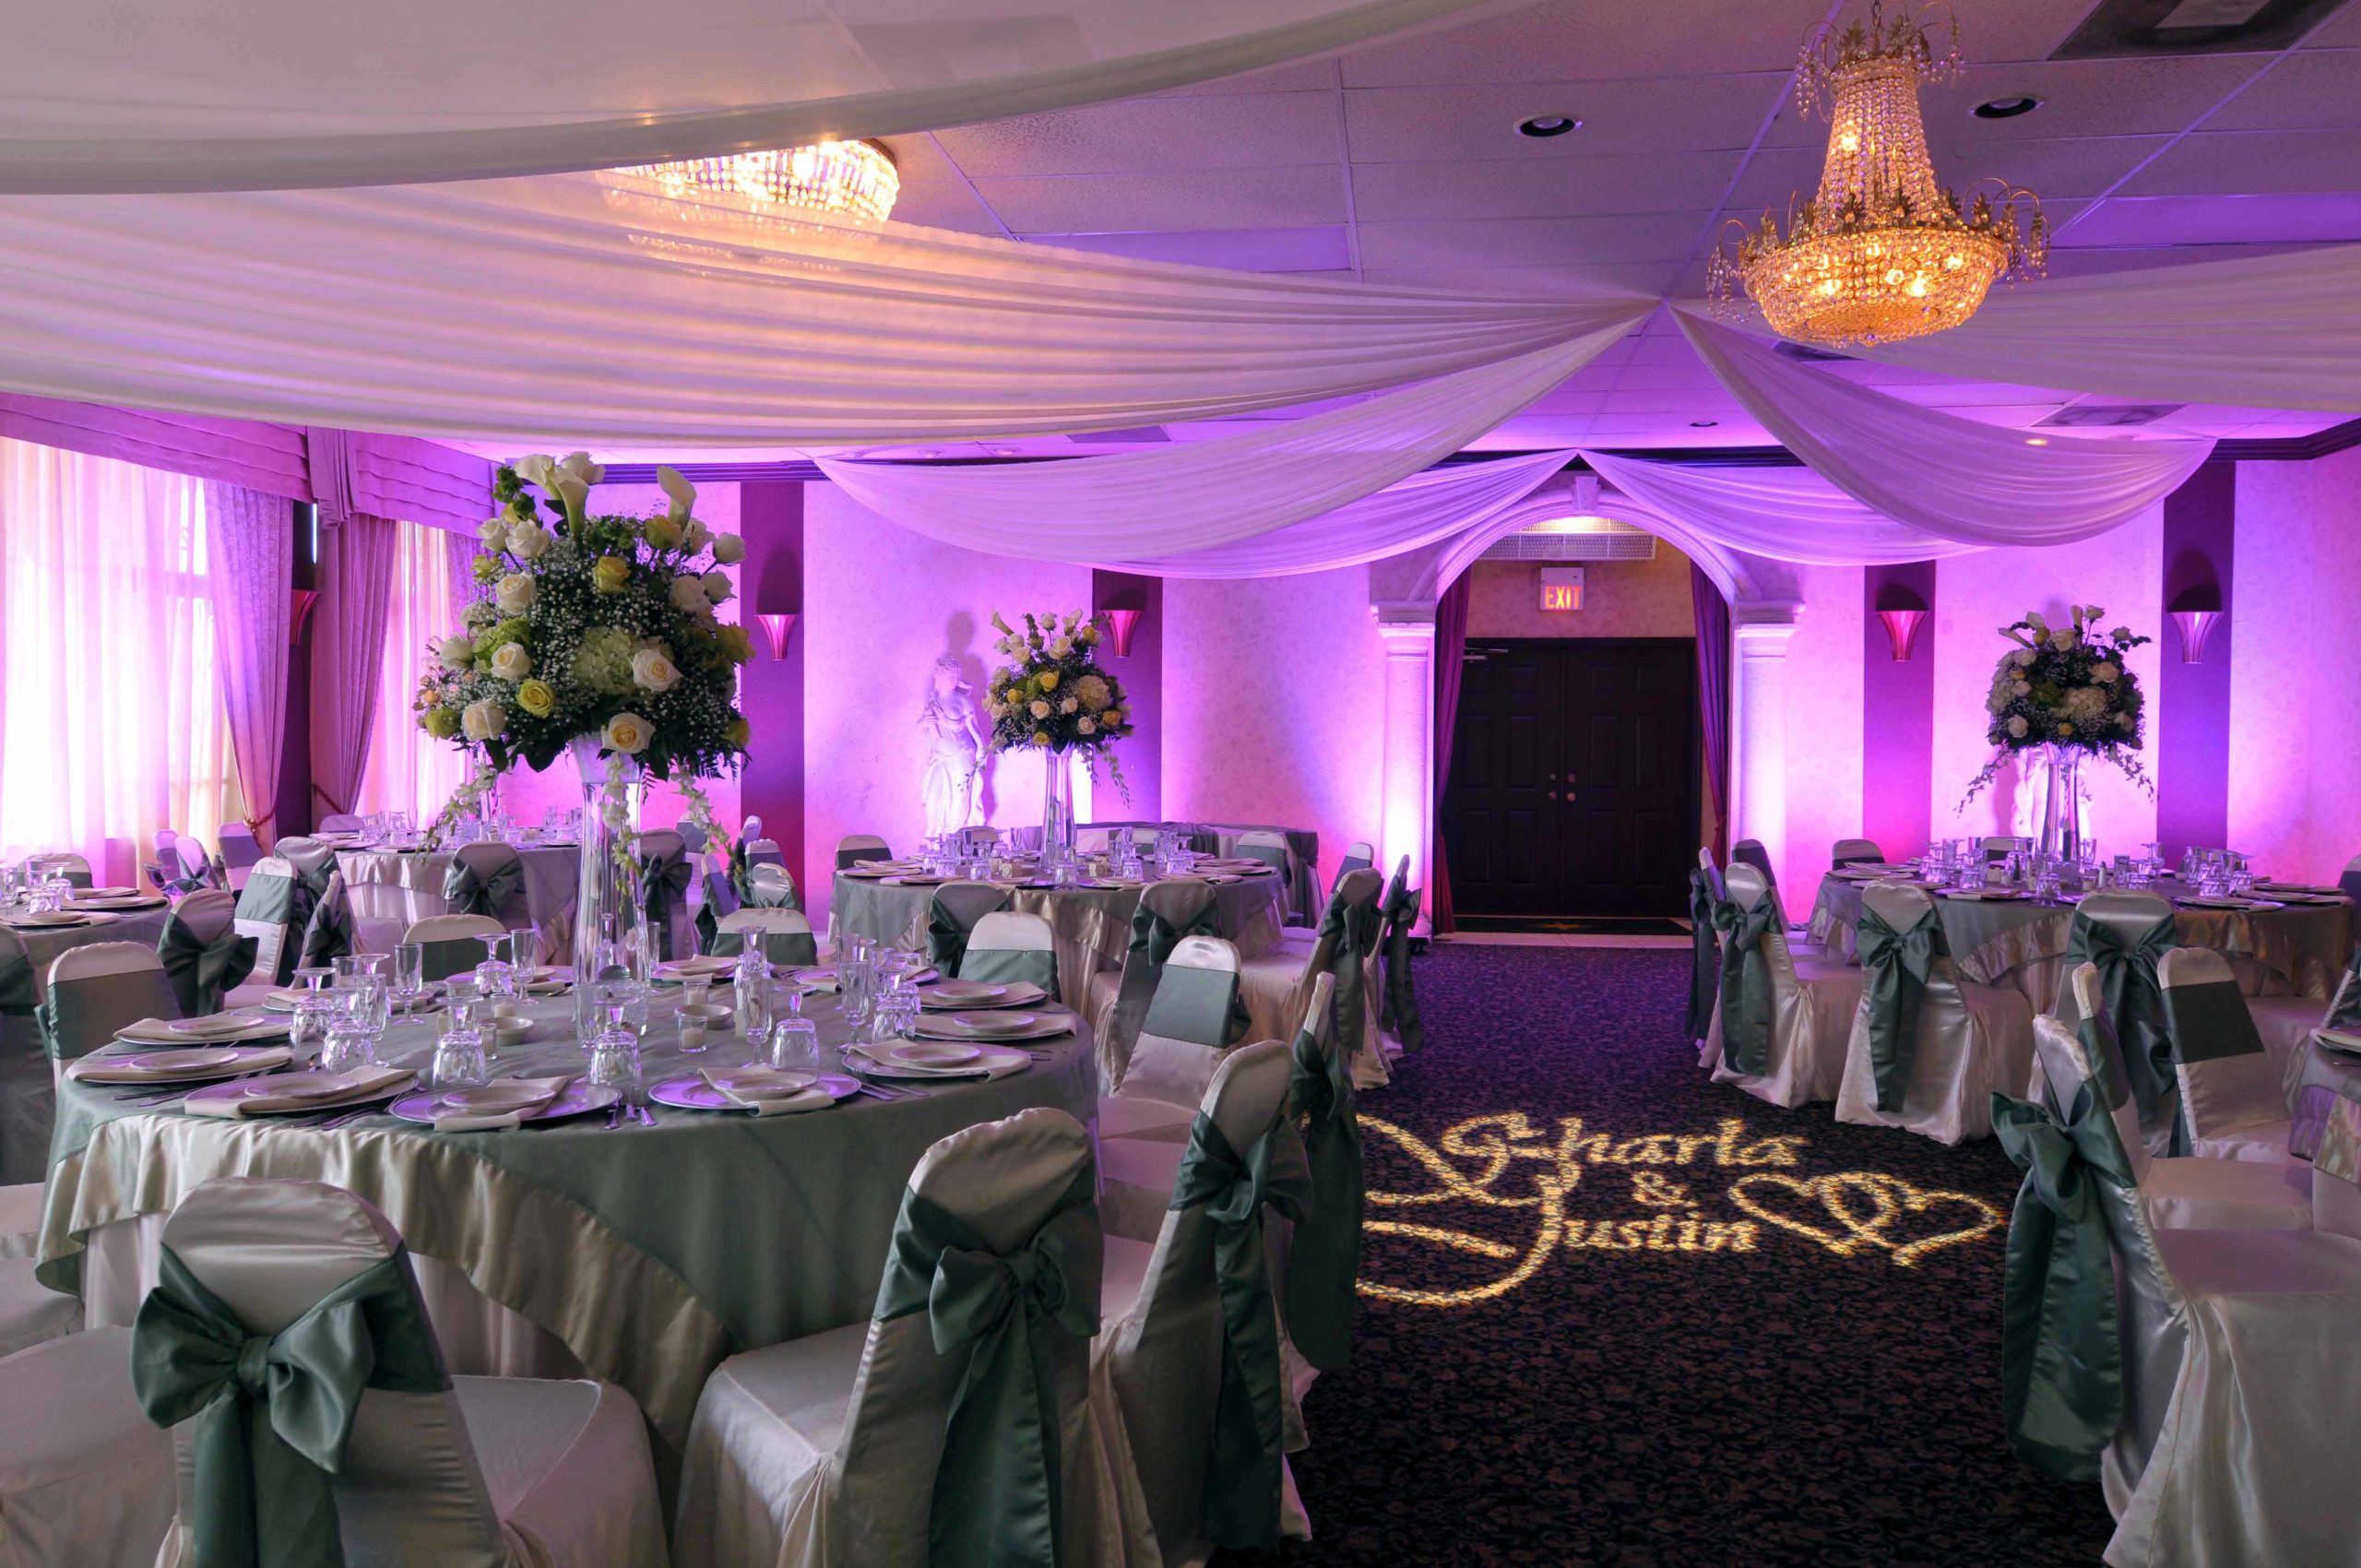 Wedding reception ballroom with lavender lighting